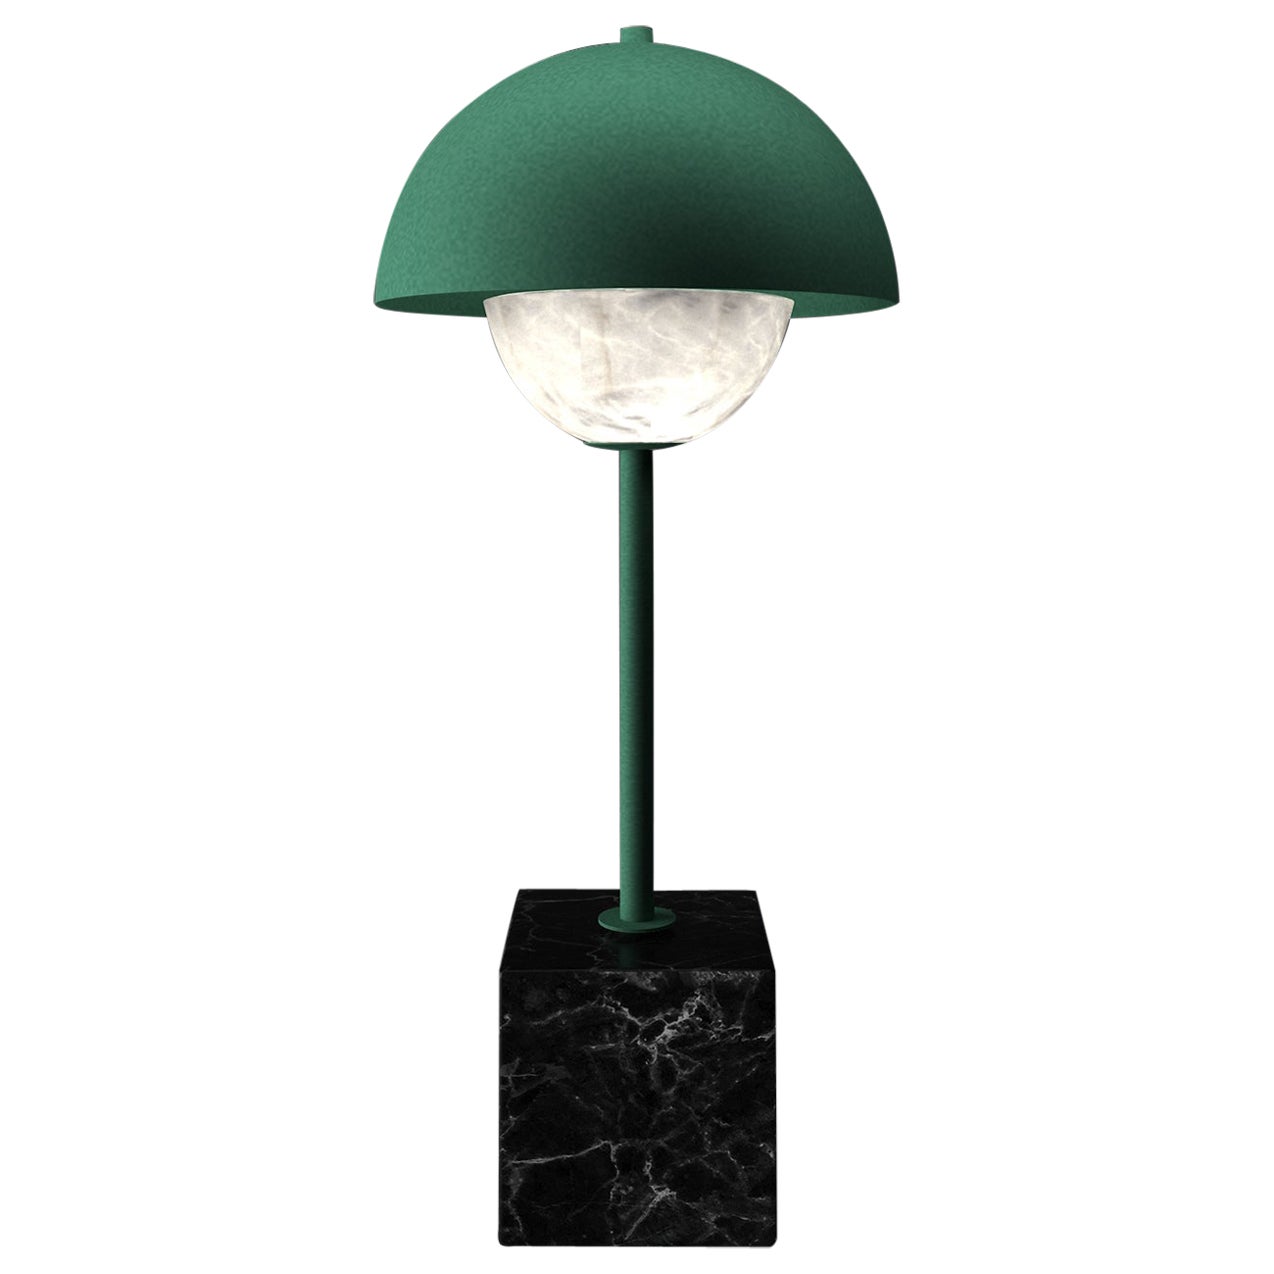 Apollo Freedom-Tischlampe aus grünem Metall von Alabastro Italiano